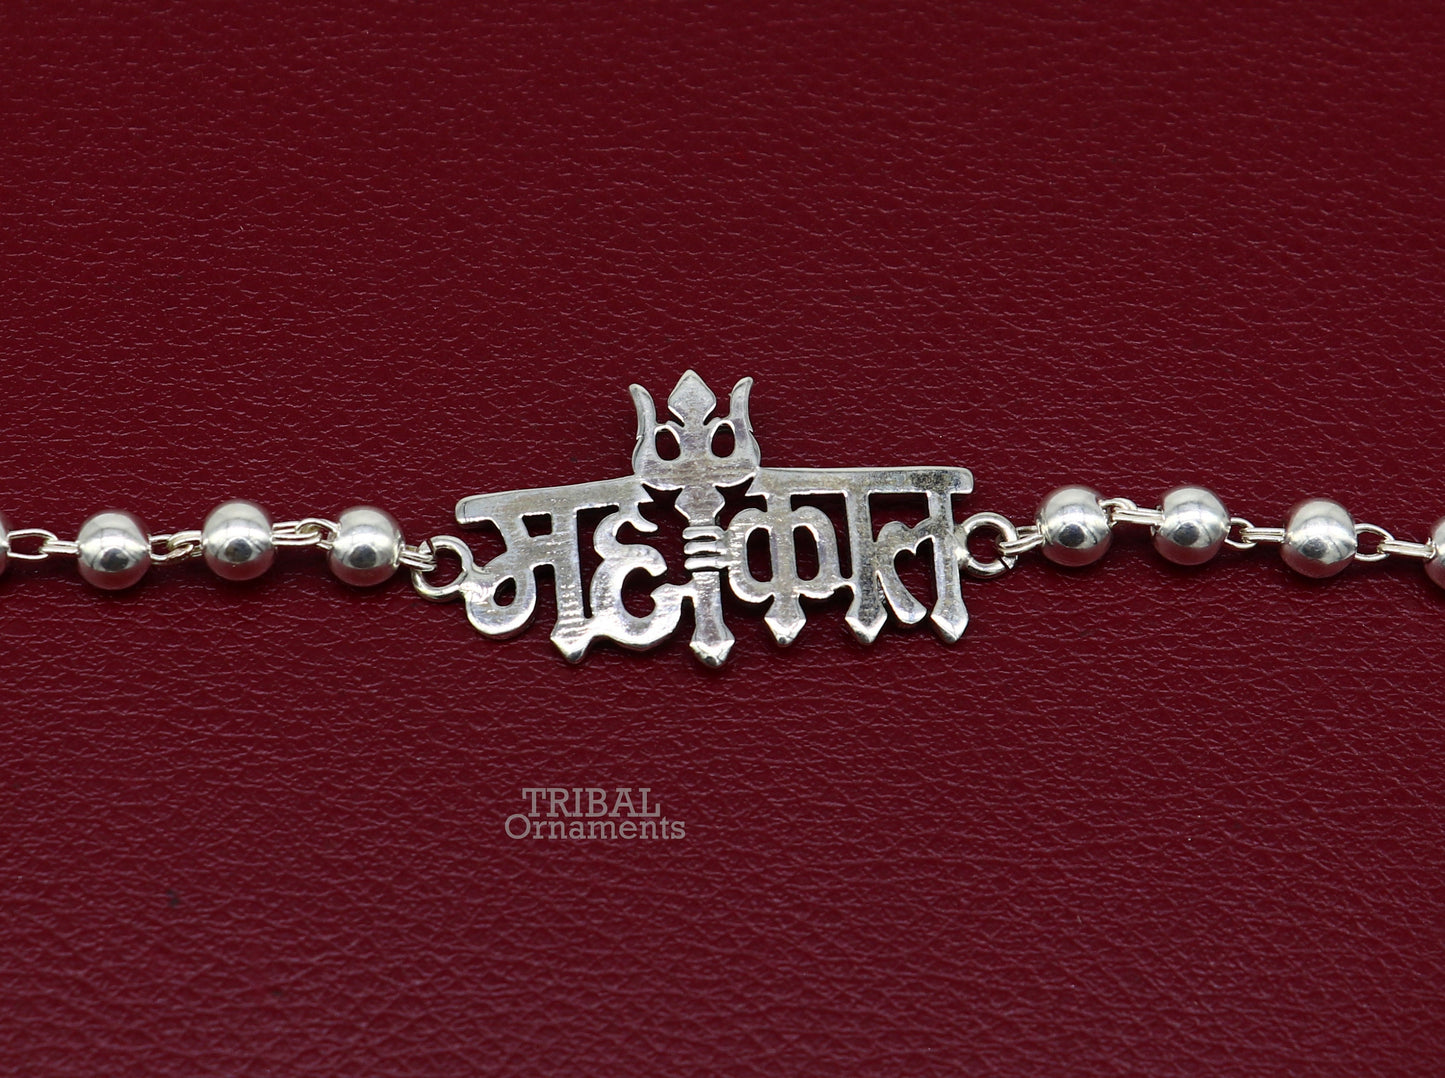 925 sterling silver handmade lord Shiva Mahakal design Rakhi bracelet amazing silver beads Mahakaal bracelet, use as daily use jewelry rk215 - TRIBAL ORNAMENTS